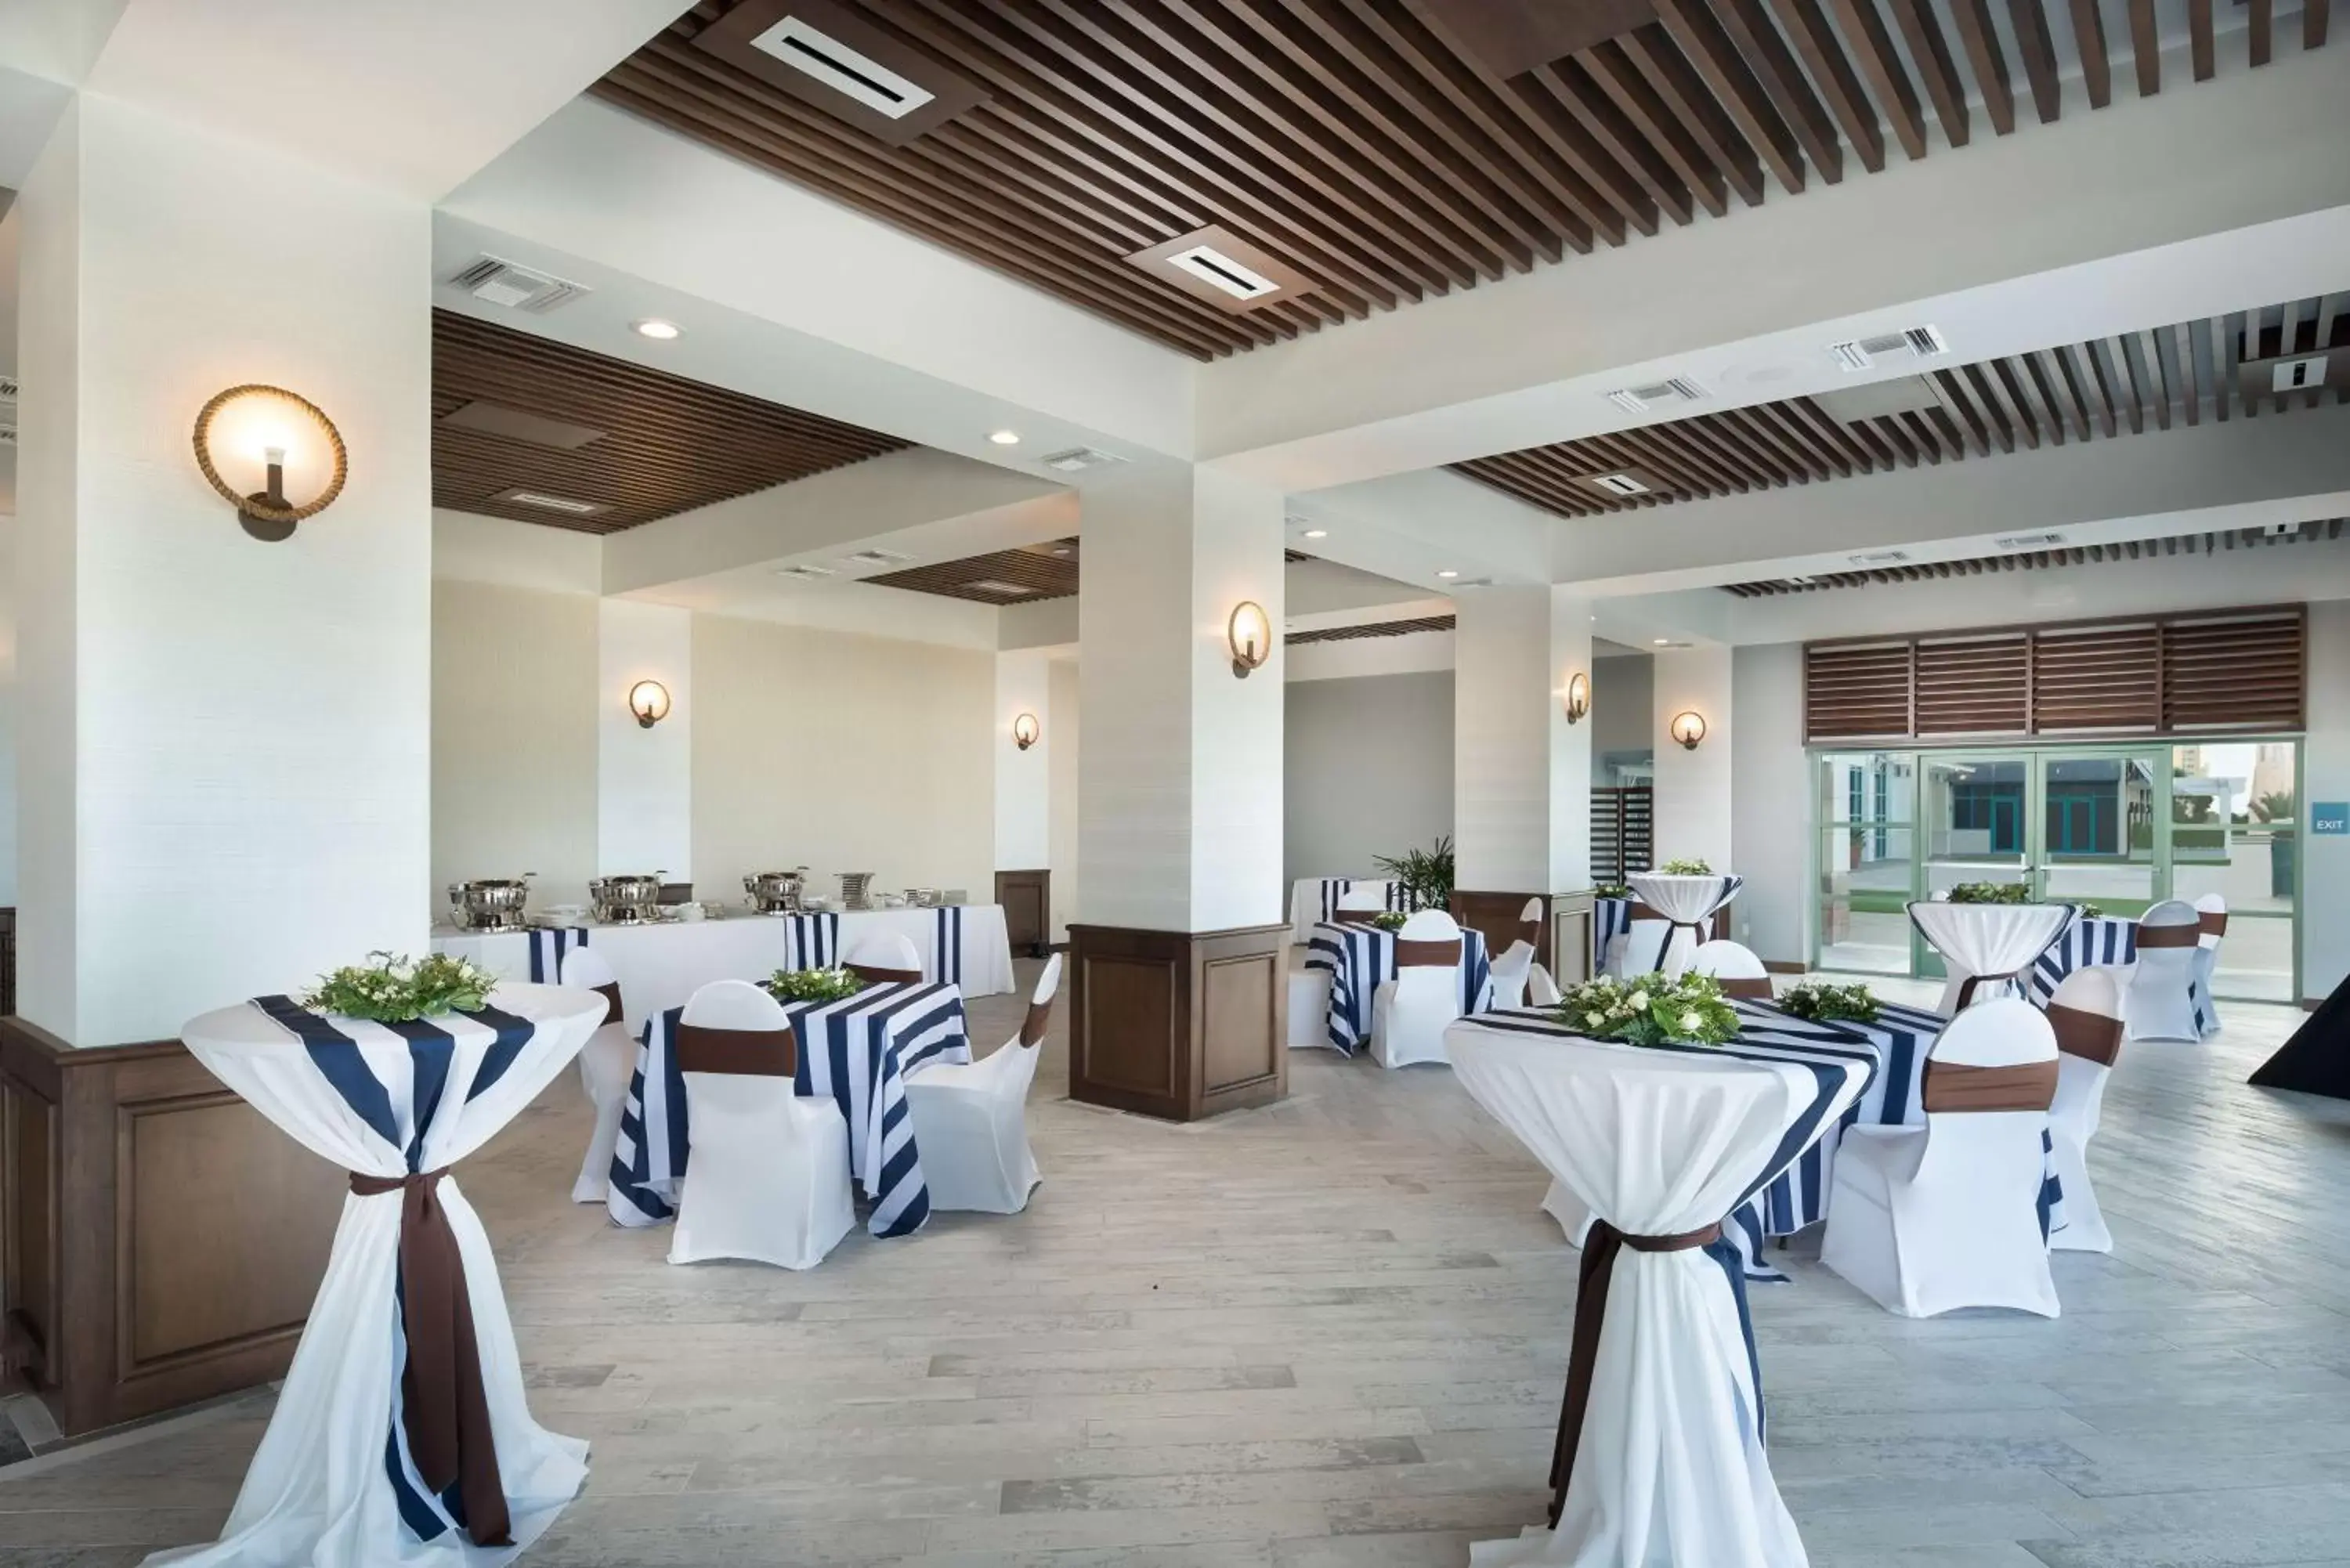 Meeting/conference room, Banquet Facilities in Hilton Daytona Beach Resort